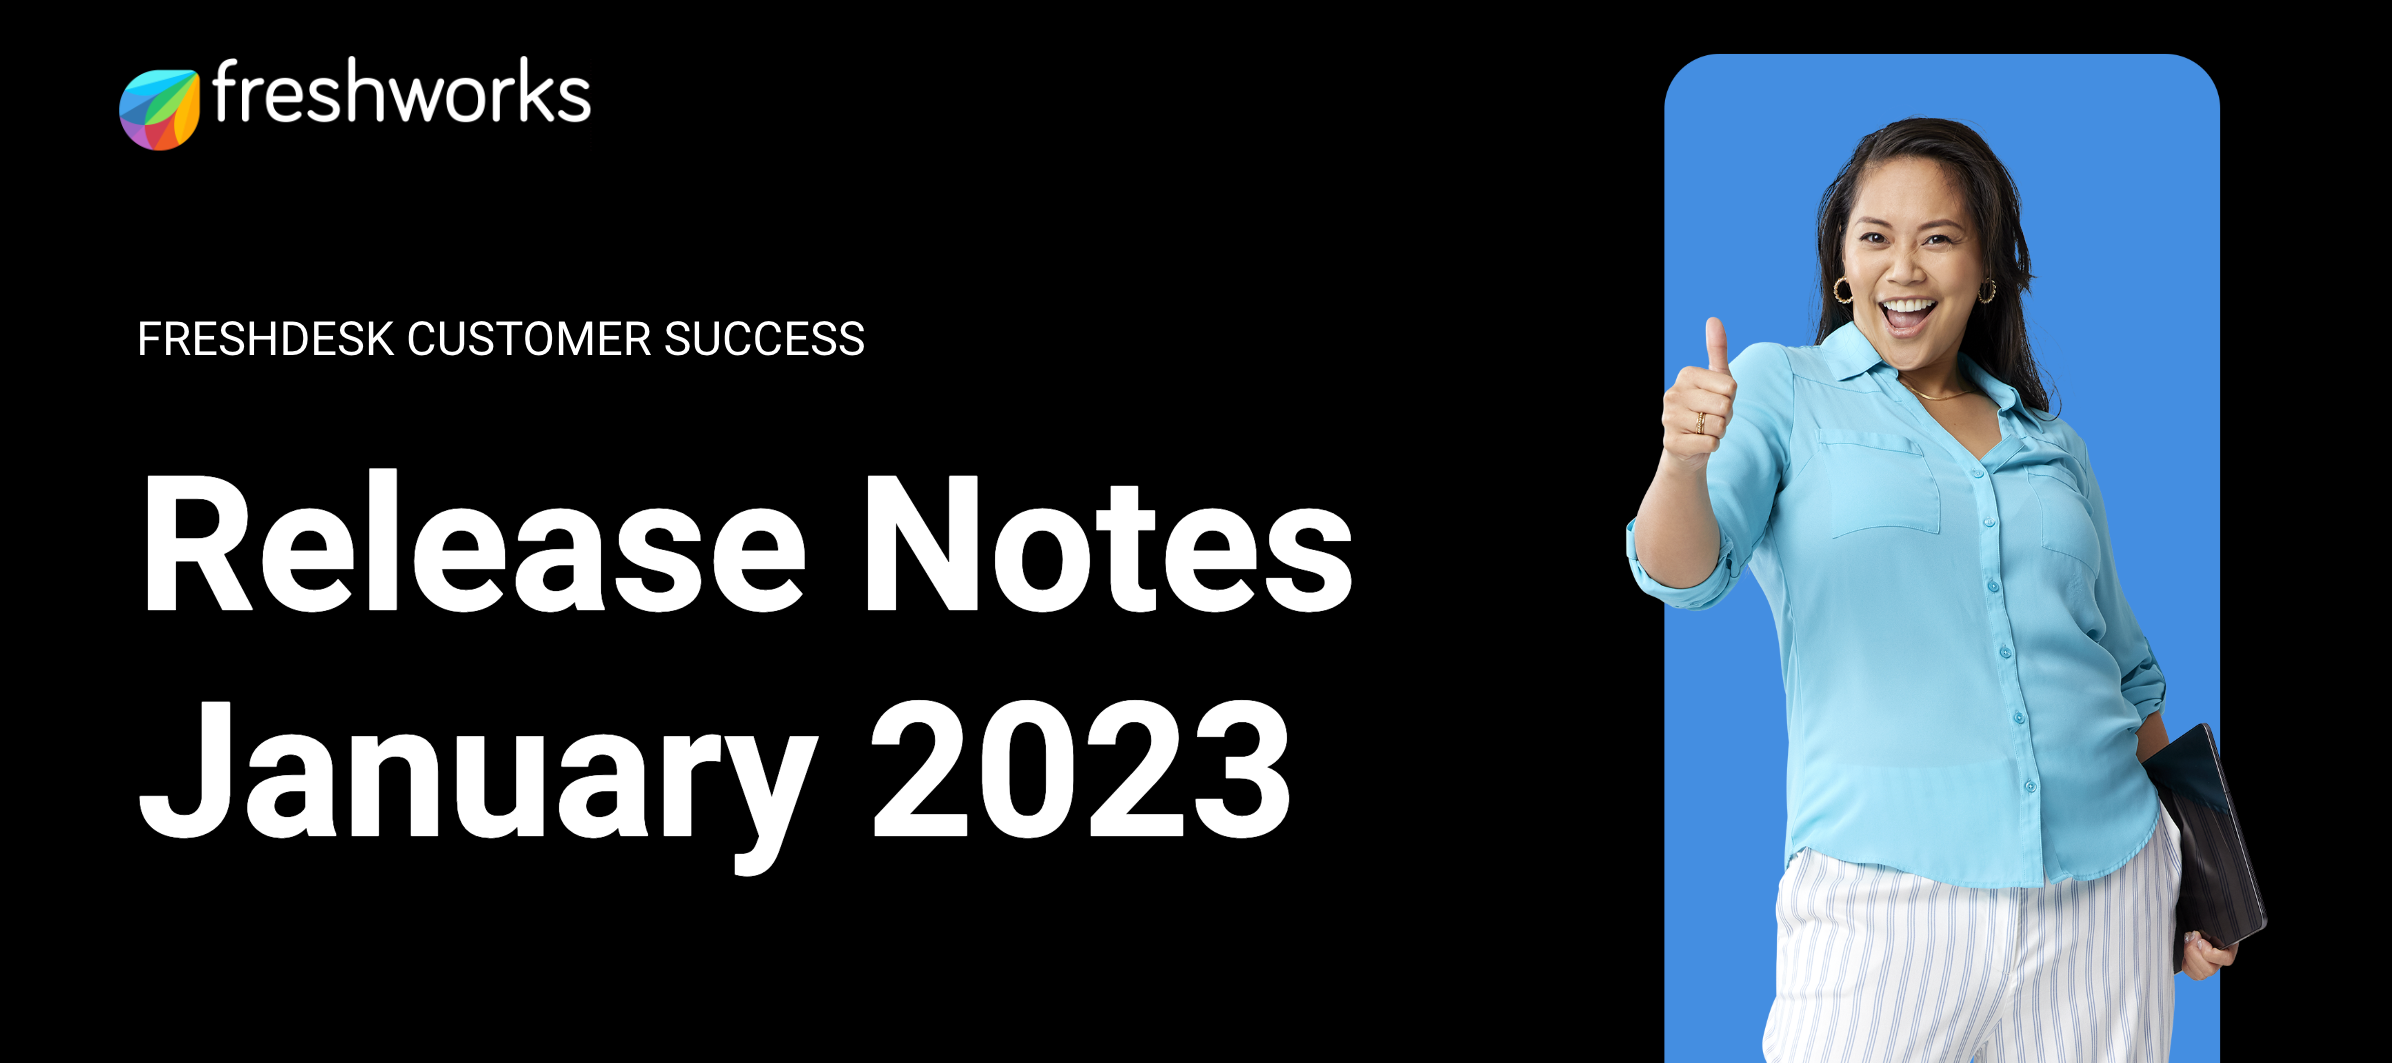 Freshdesk Customer Success Release Notes - January 2023